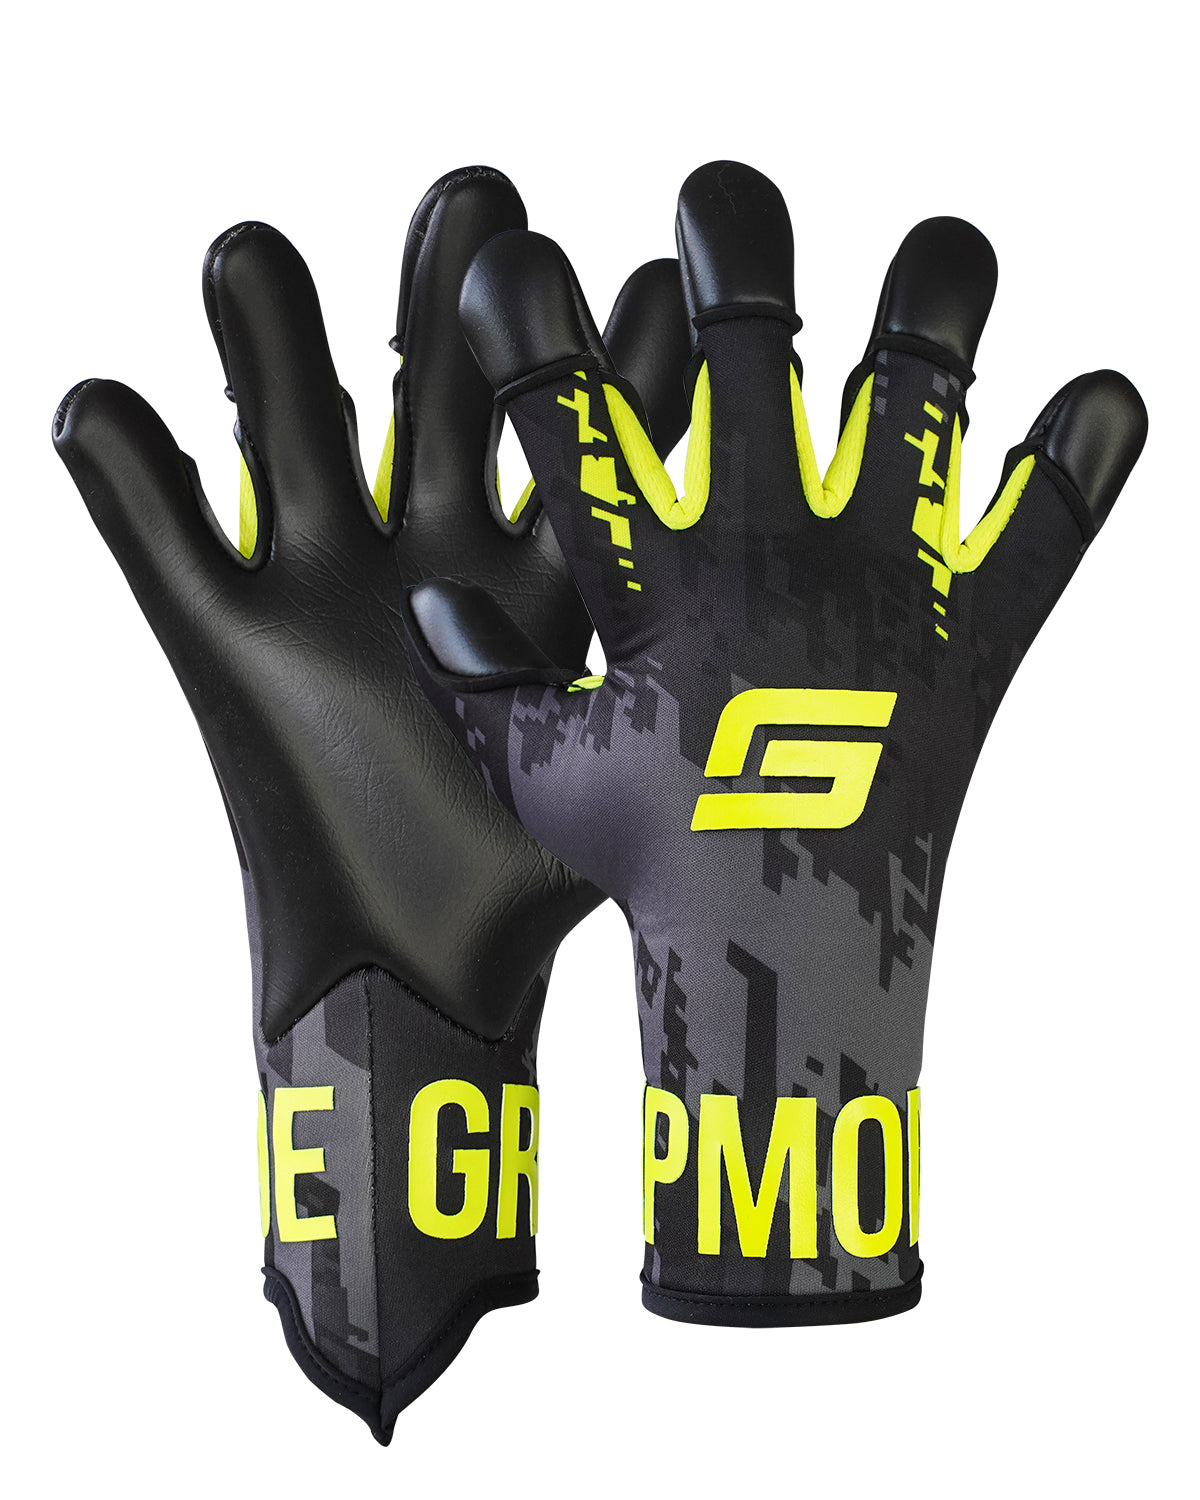 Air Ft - Professional goalkeeper gloves - Gripmode